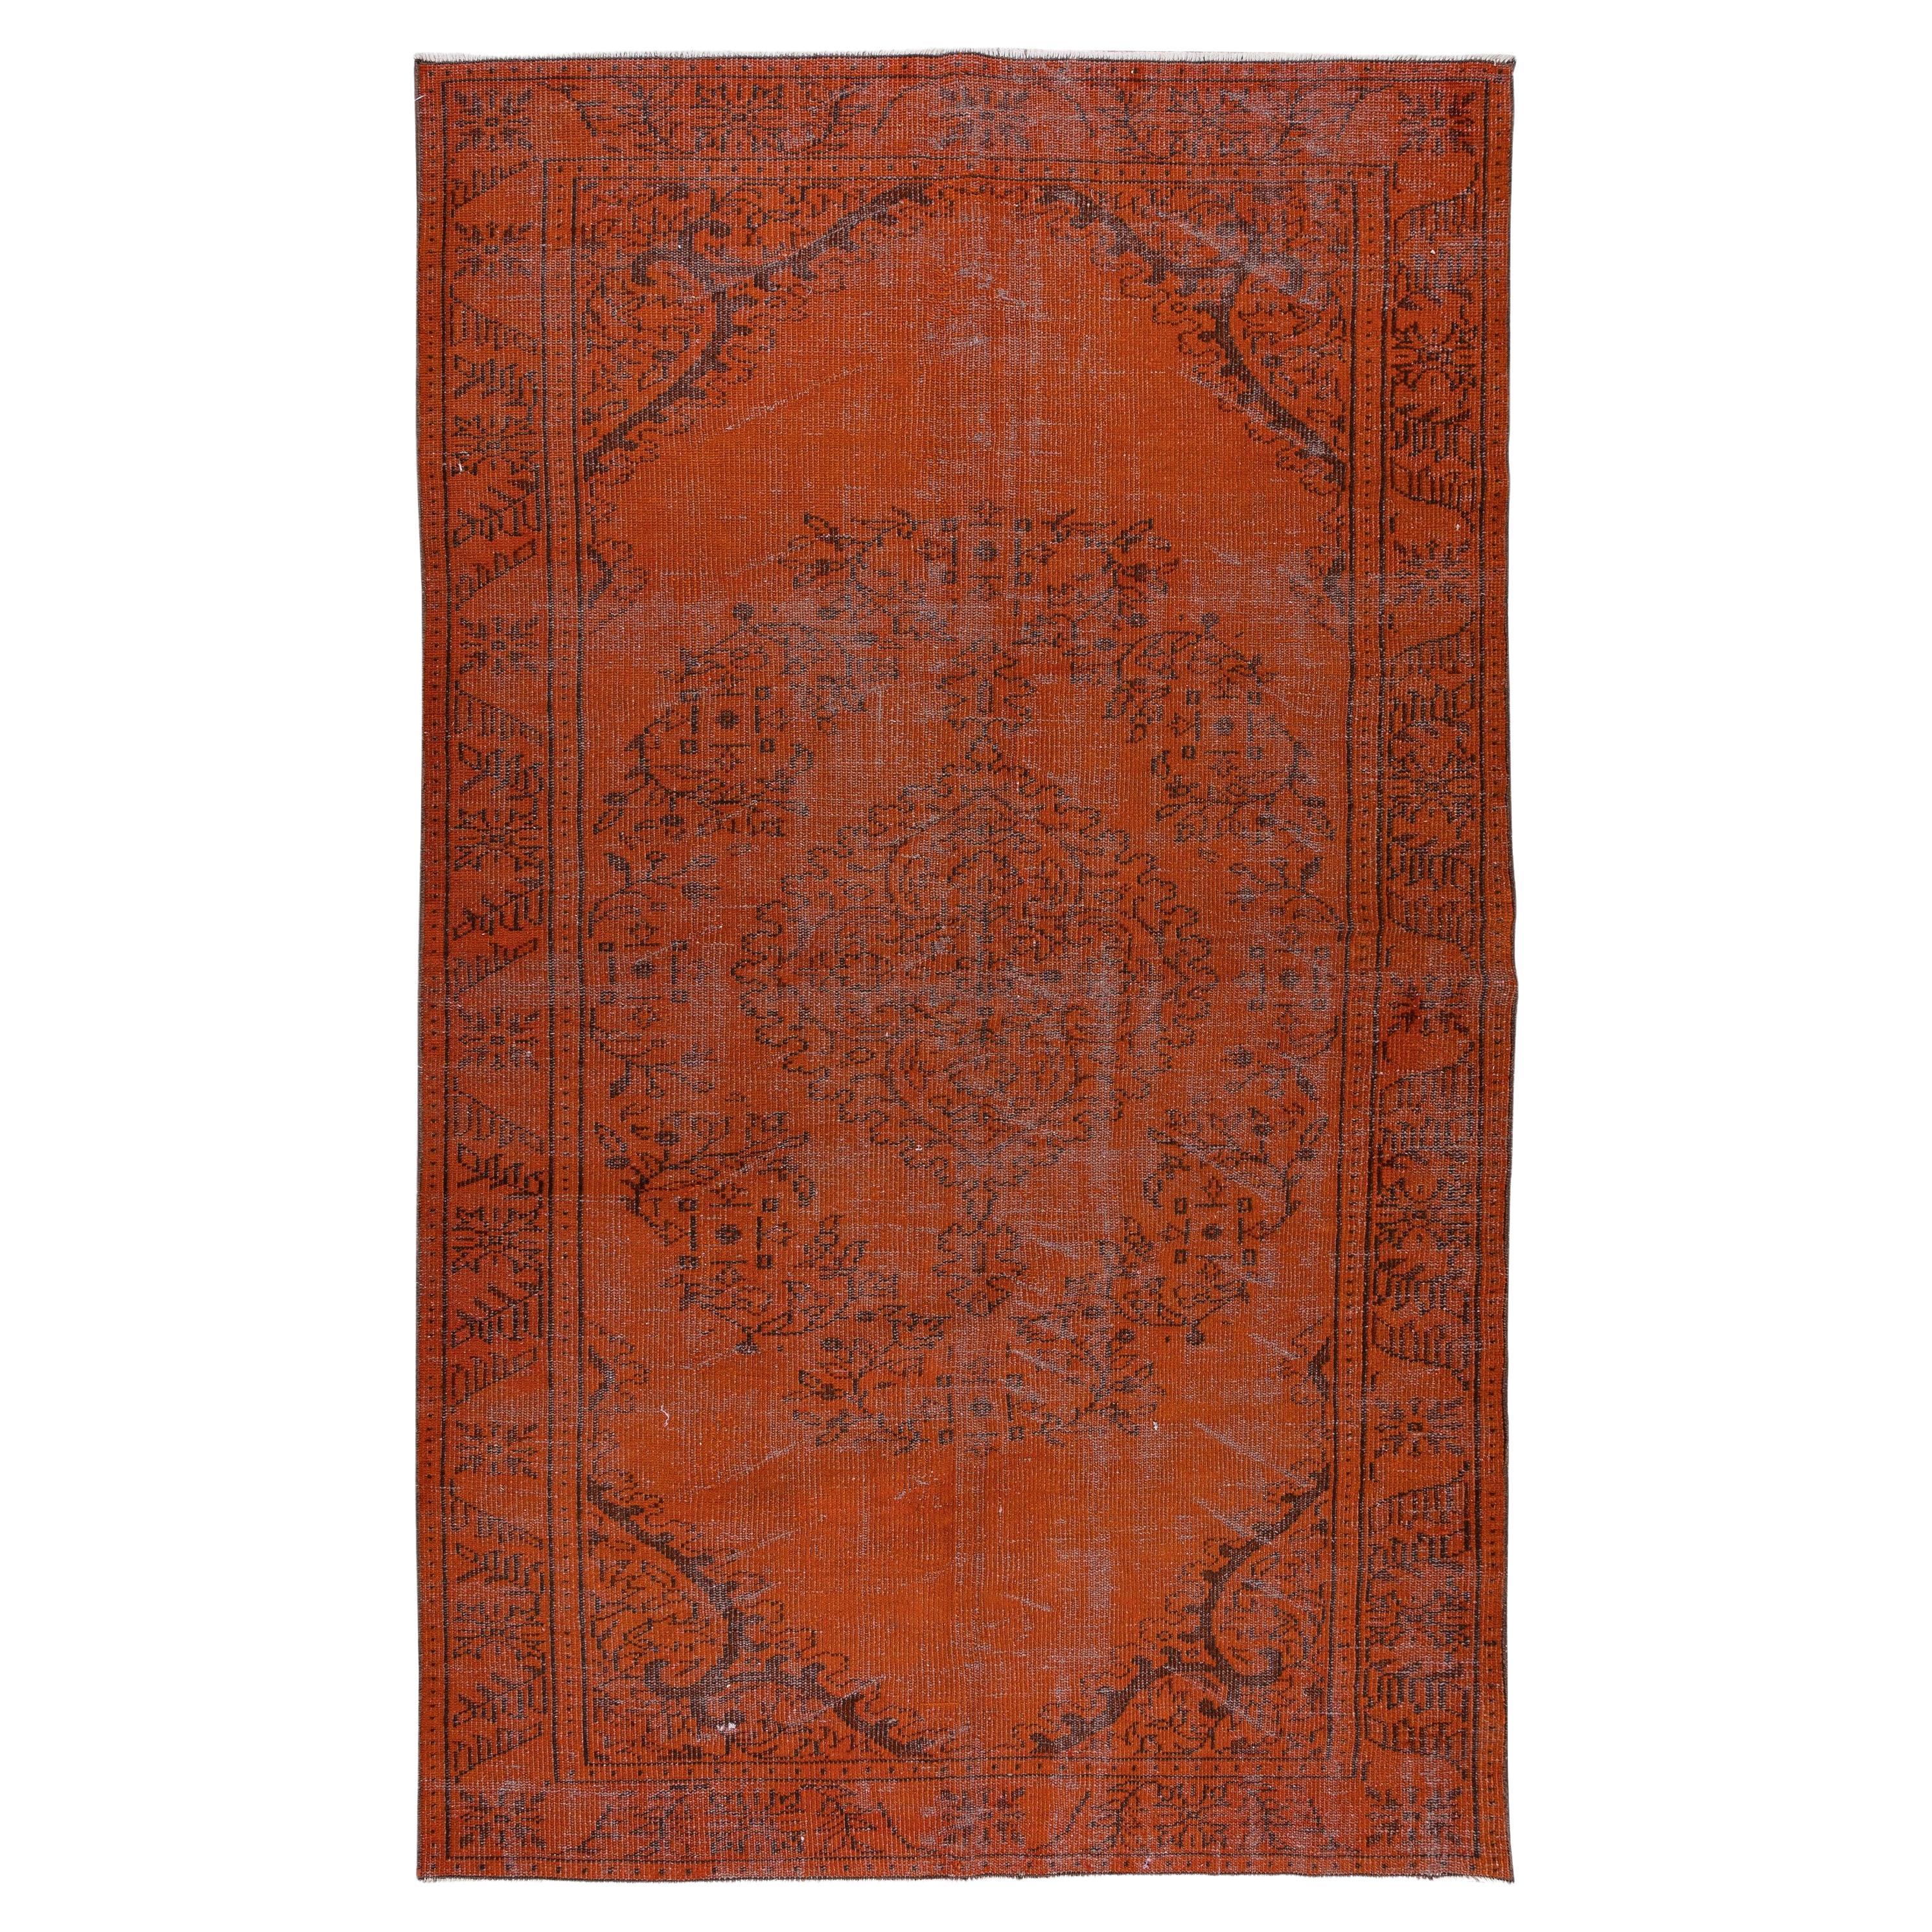 5.6x9.3 Ft Vintage Handmade Anatolian Medallion Pattern Wool Area Rug in Orange For Sale